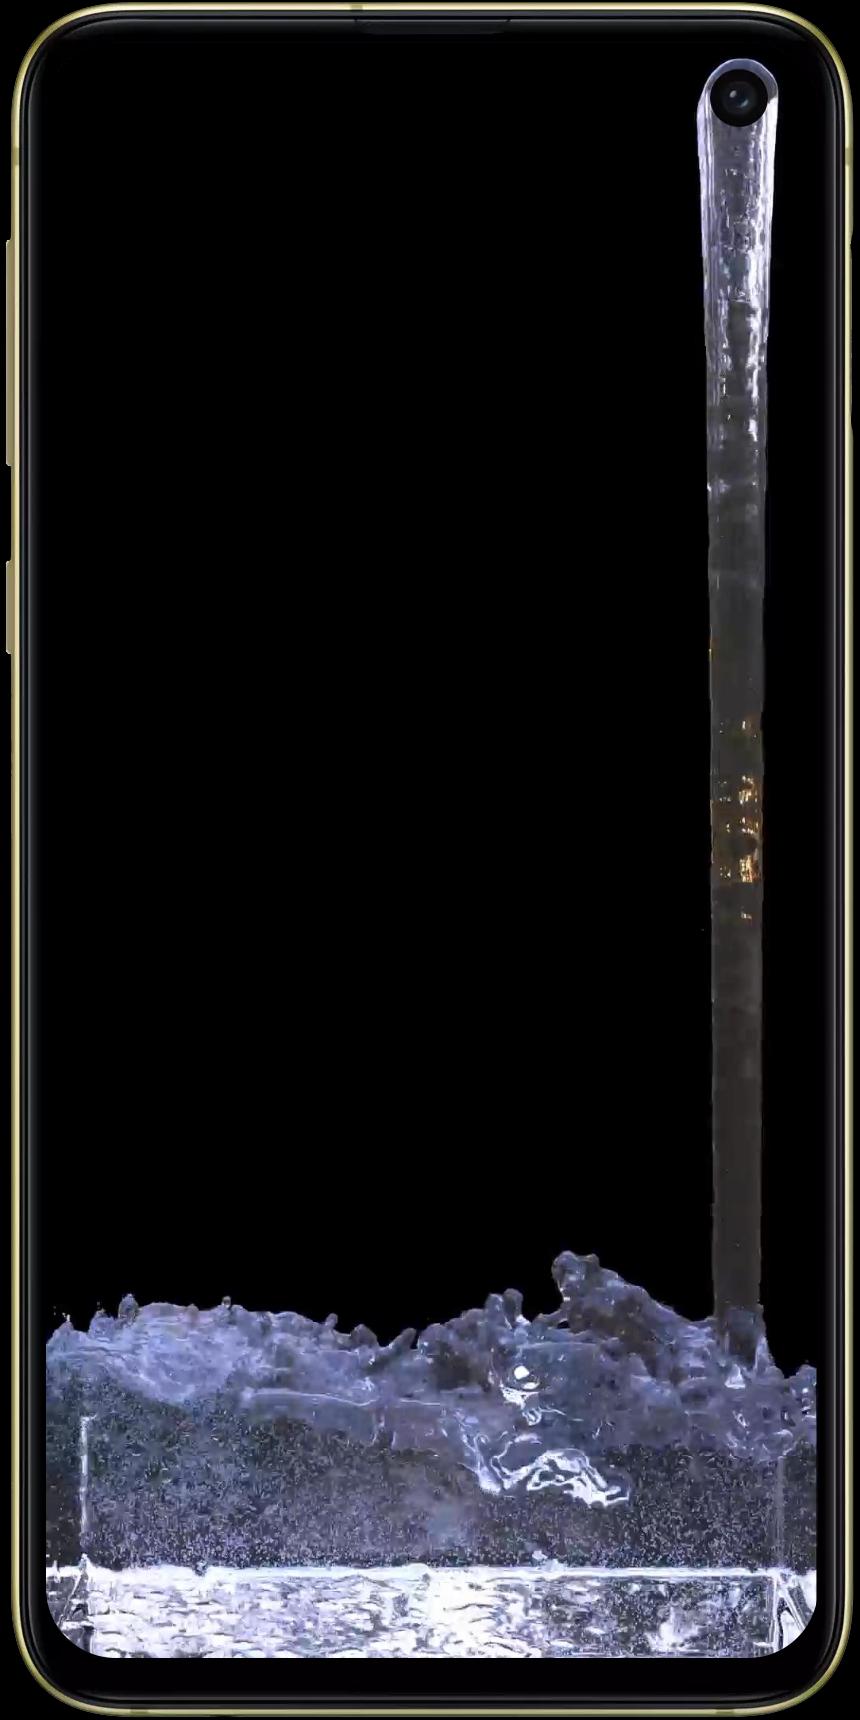 S10 Plus Water Drop Live Wallpaper - Rusty Pixels